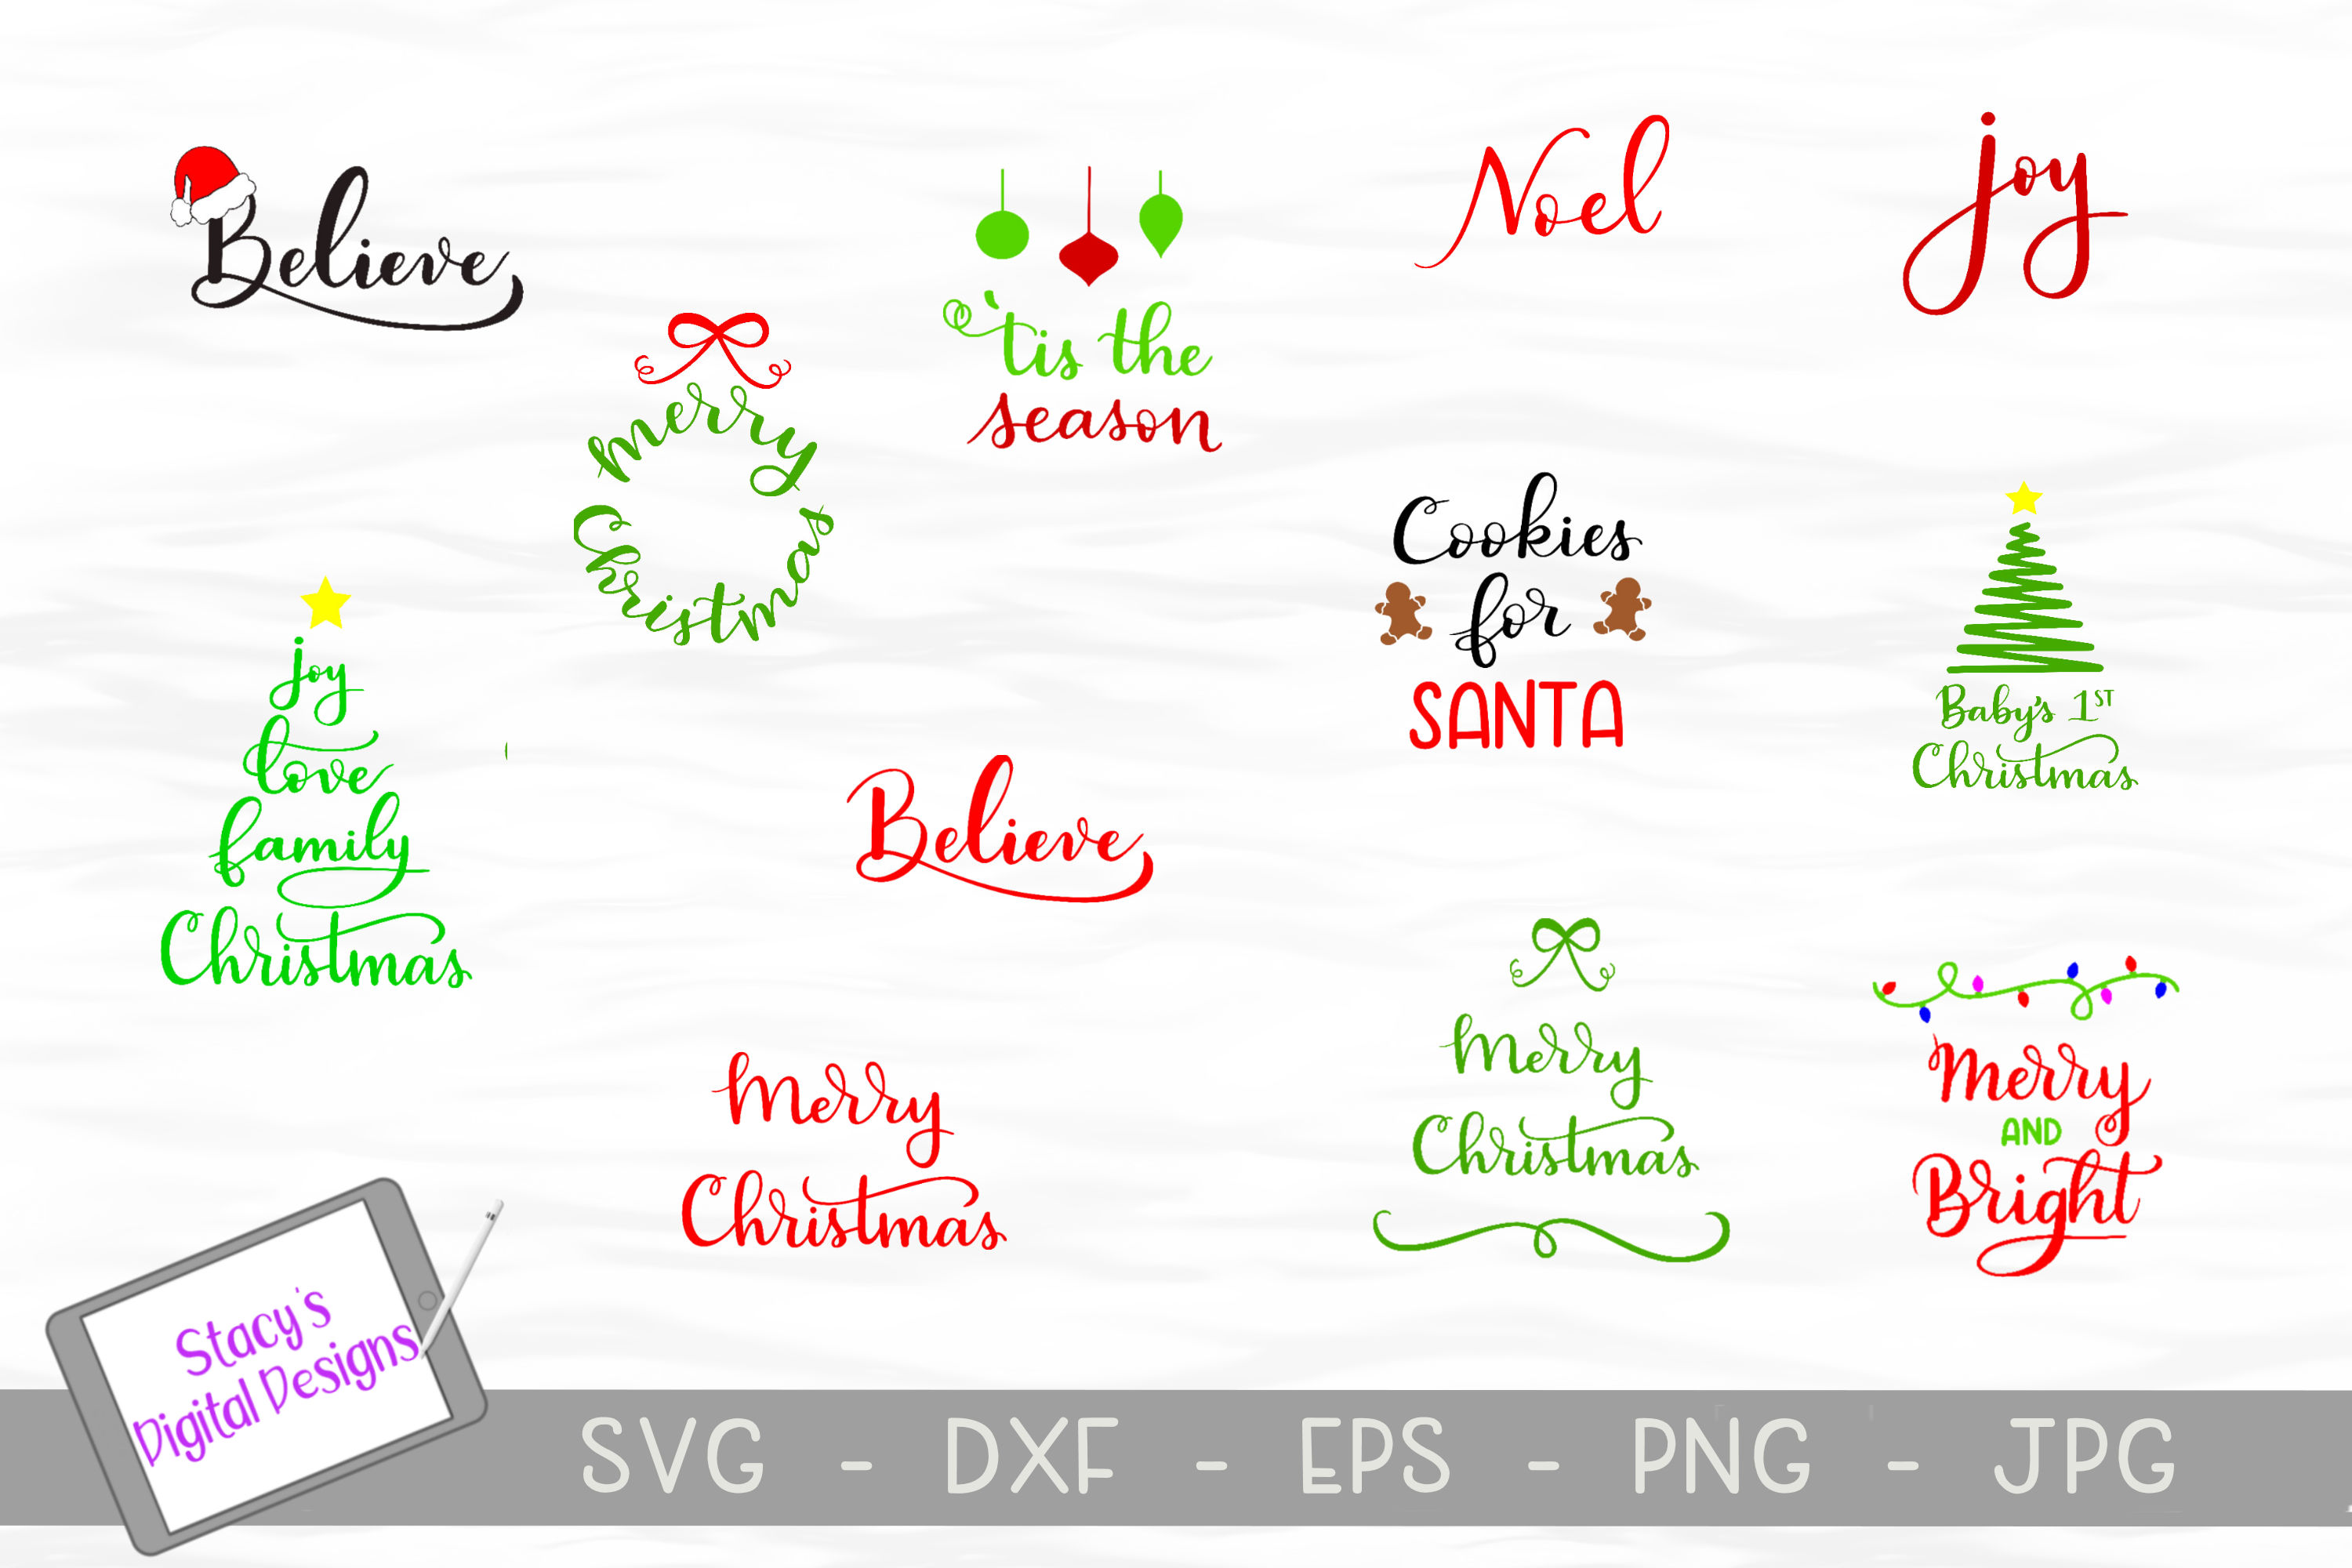 Christmas SVG bundle - Volume 2 / 12 Christmas SVG designs